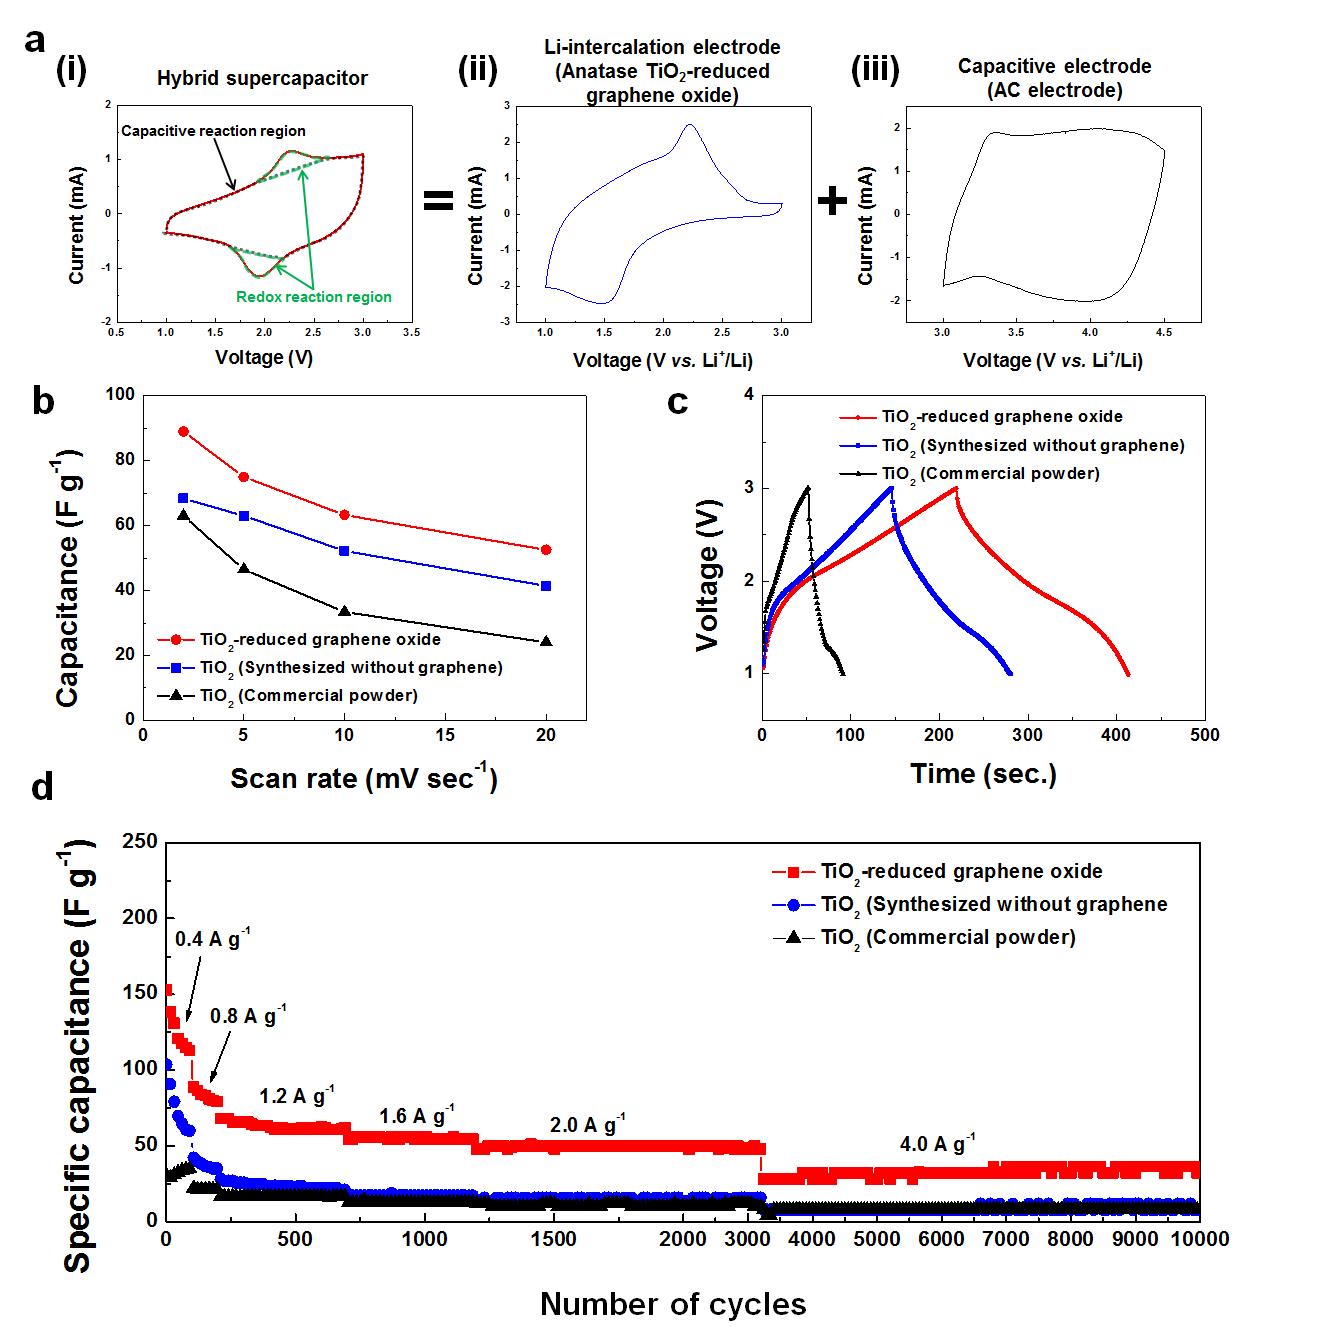 TiO2-그래핀 복합체 음극과 activated carbon 양극으로 구성된 하이브리드 슈퍼캐패시터의 전기화학 특성. (a) CV 분석 (b) Capacitances at various scan rates (c) 충방전 곡선 (d) 율특성 및 싸이클 특성